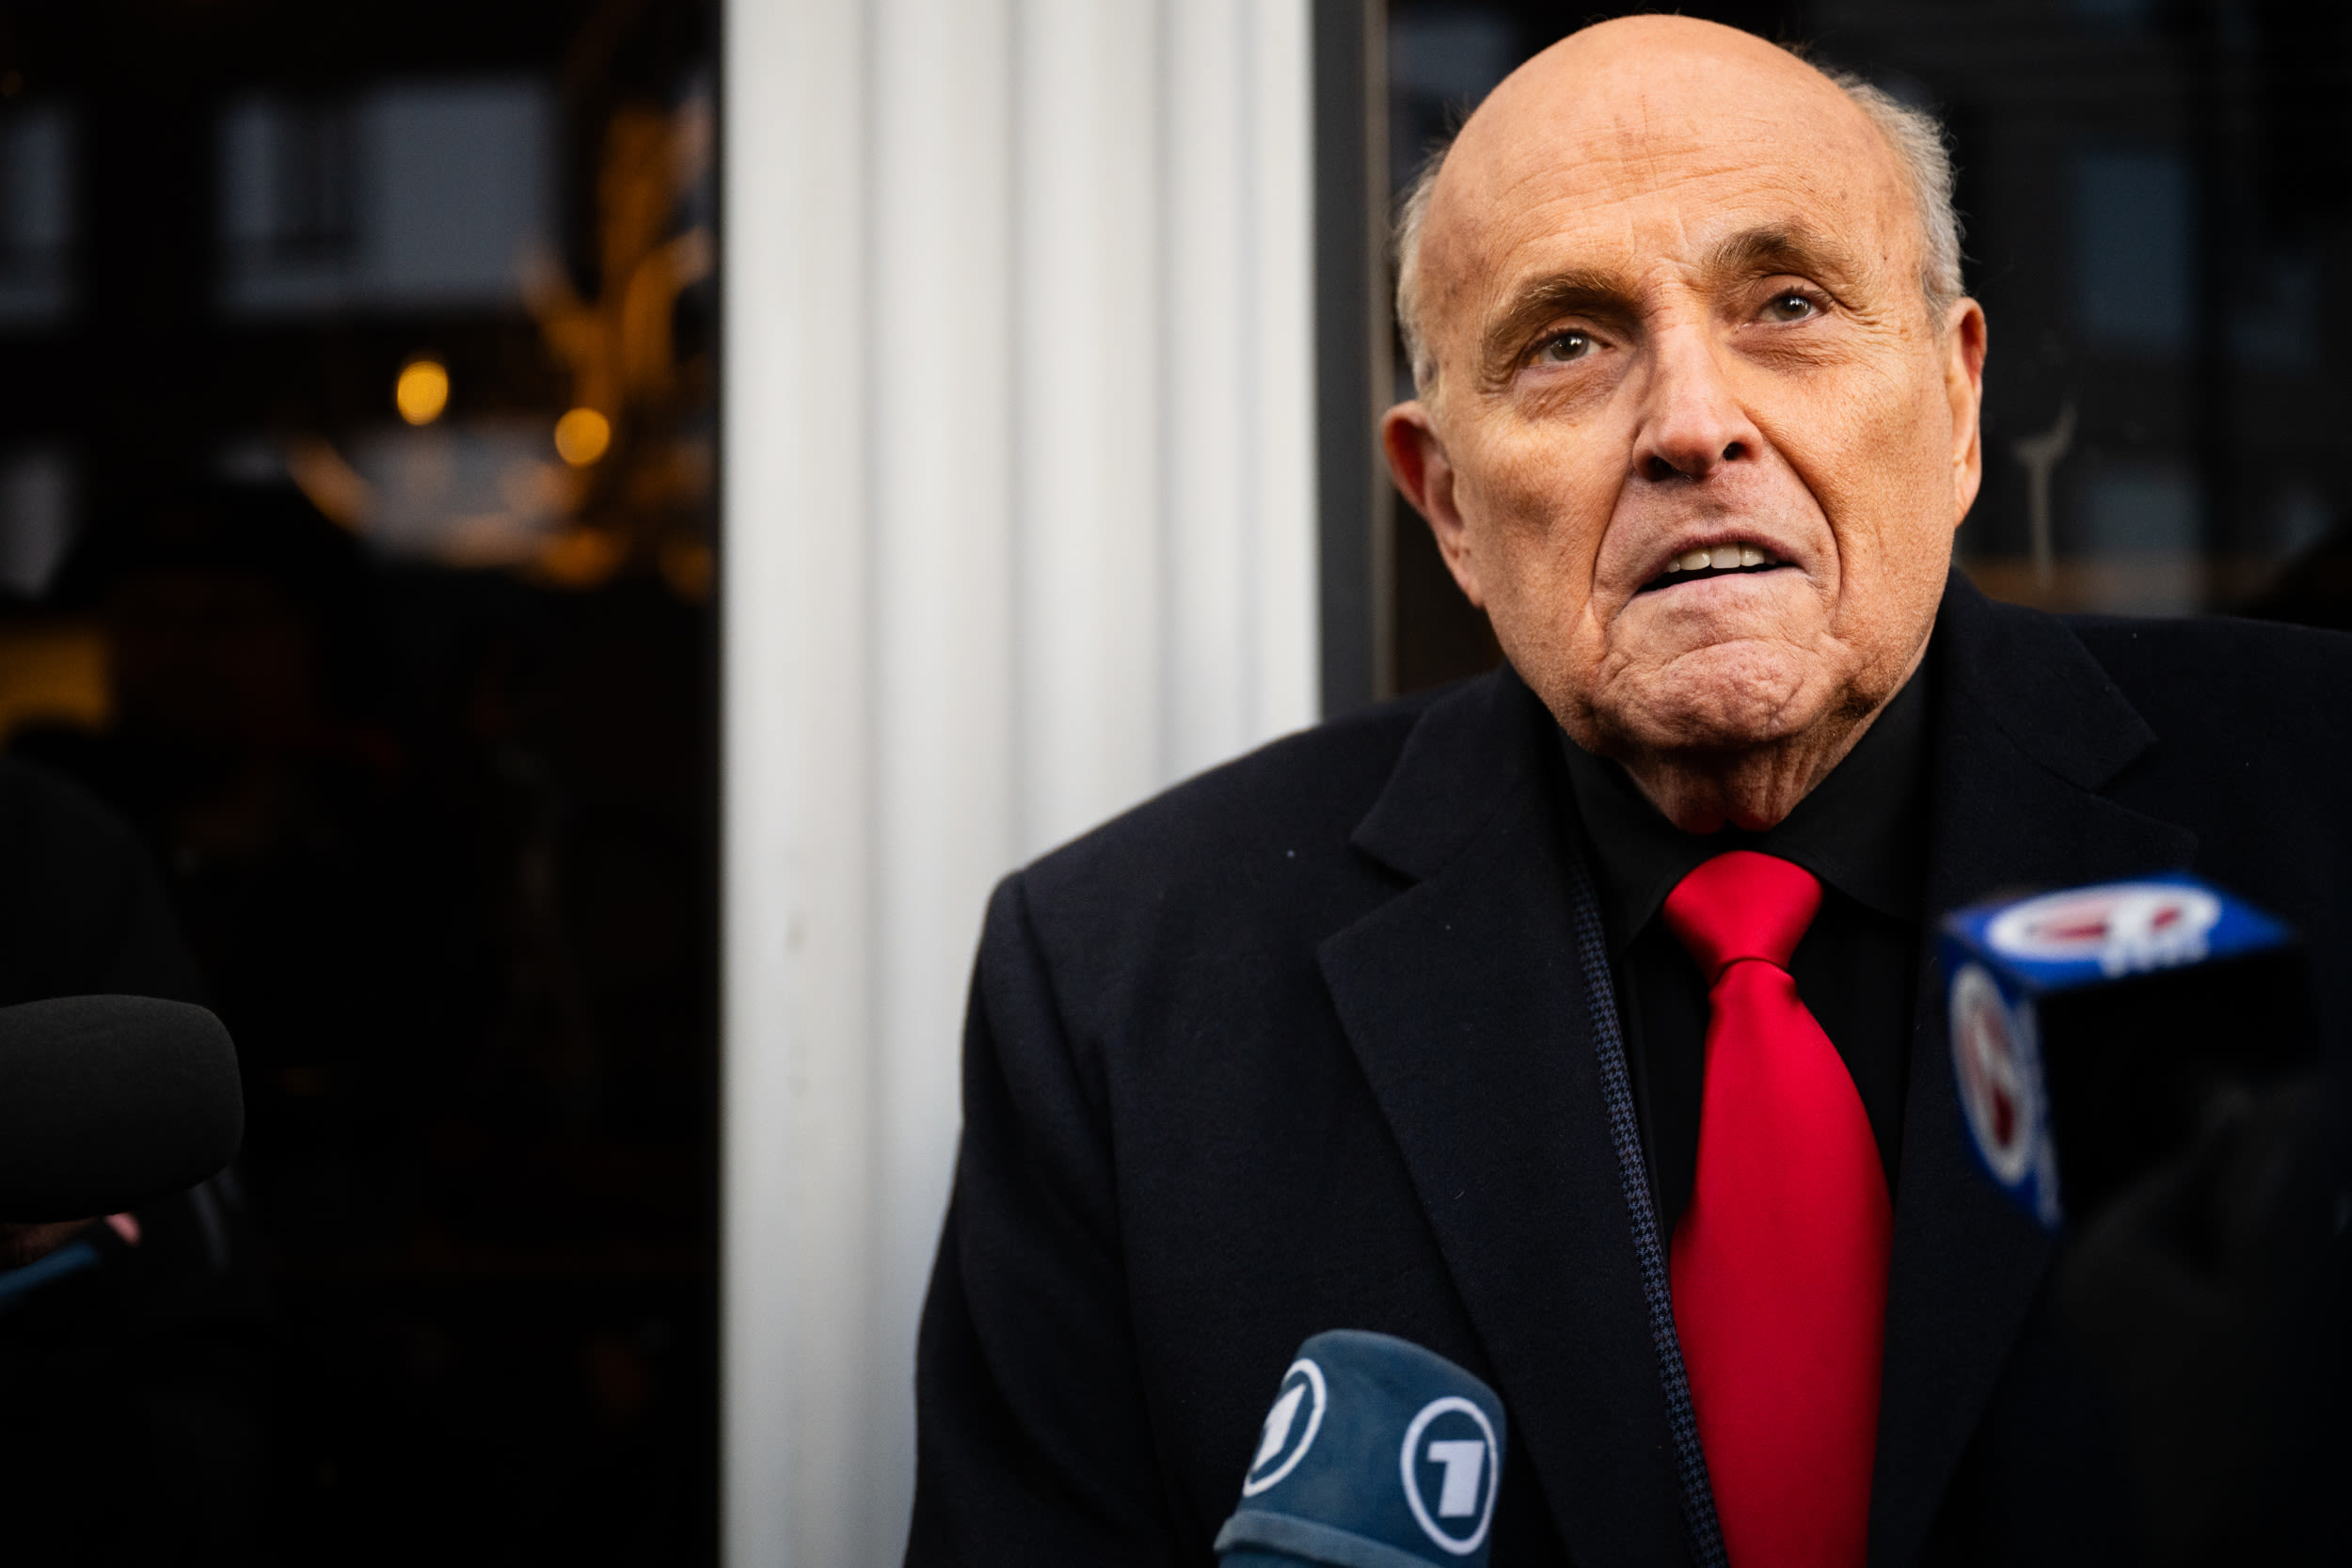 Rudy Giuliani faces new legal warning